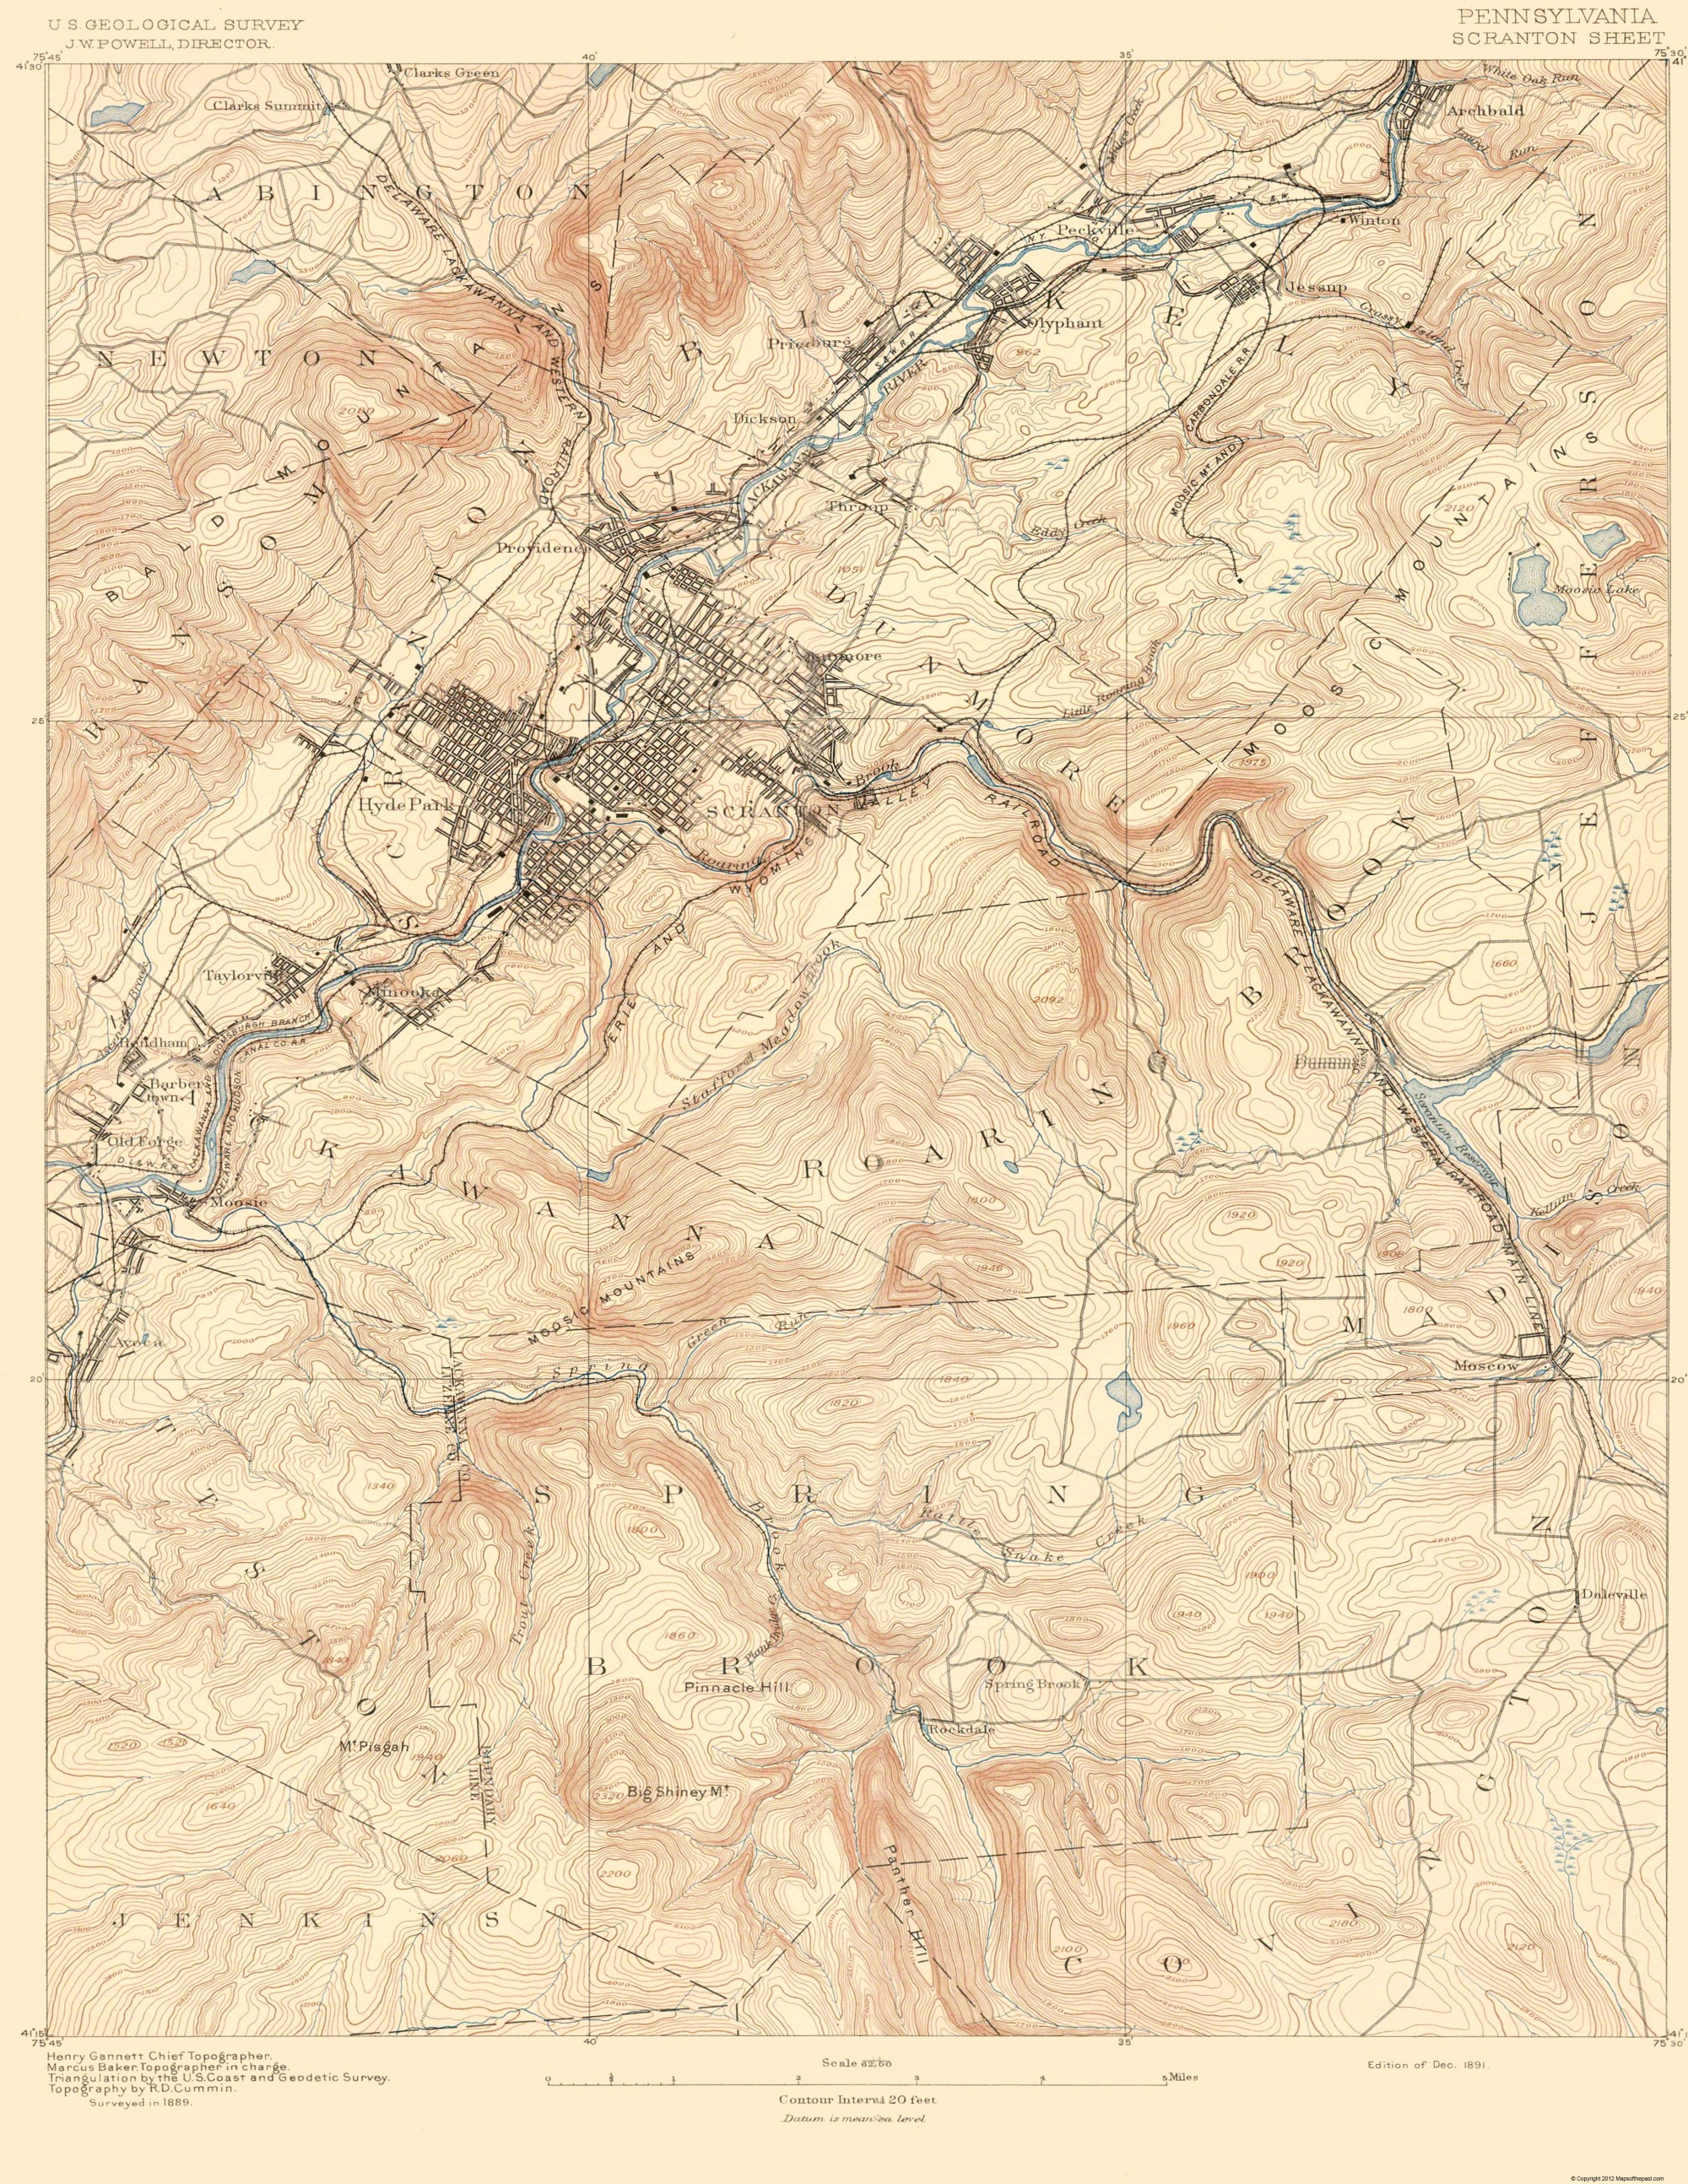 Tyrone Pennsylvania 1929 Original Vintage USGS Topography Topo Map